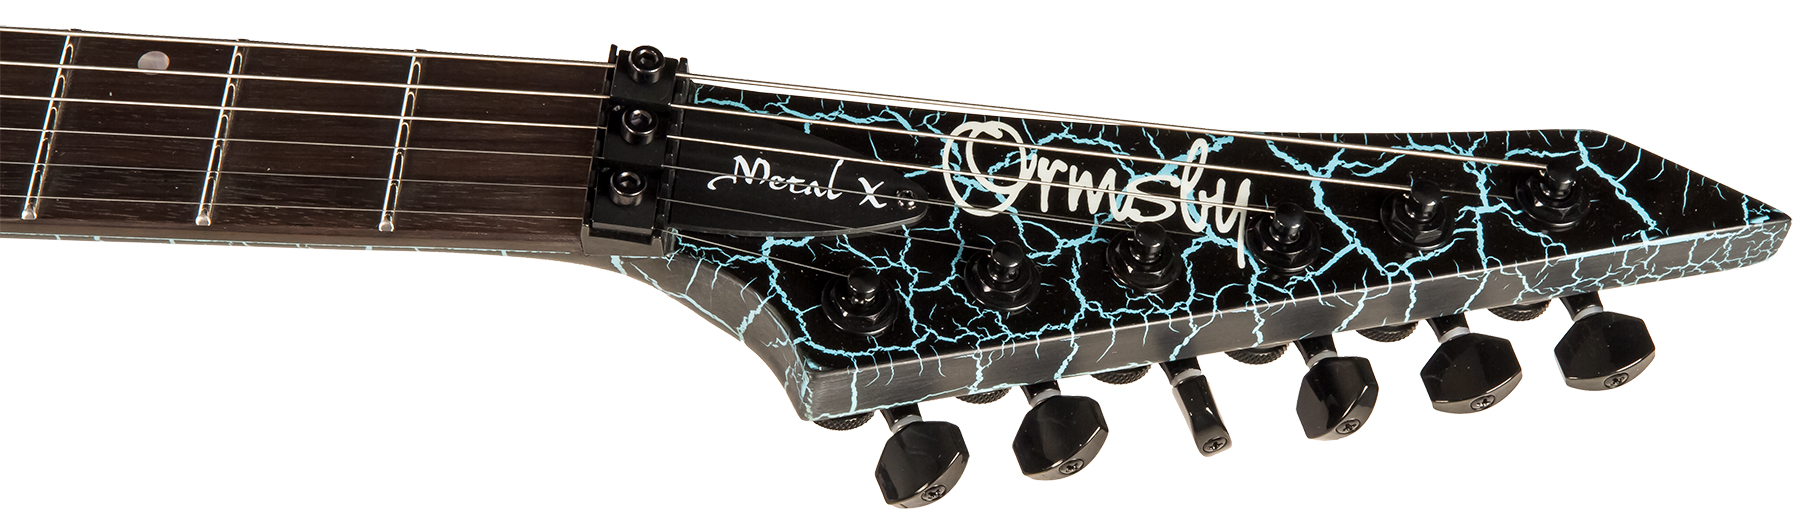 Ormsby Metal X 6 Hh Fr Eb - Azure Crackle - E-Gitarre aus Metall - Variation 4